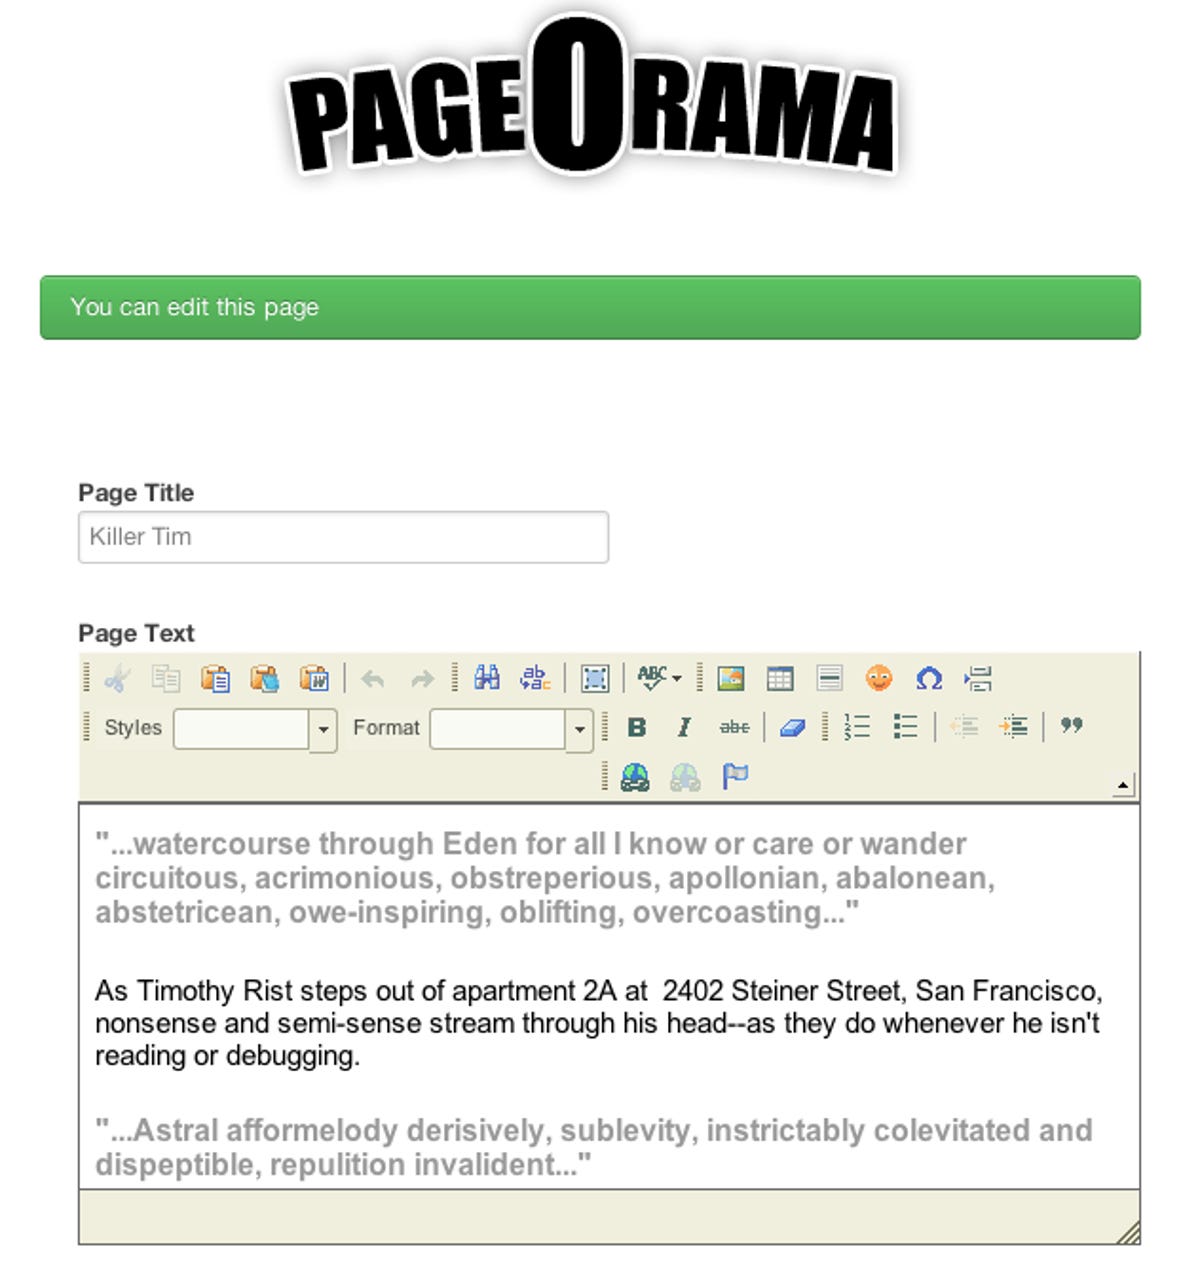 Page-o-rama Web page creation service